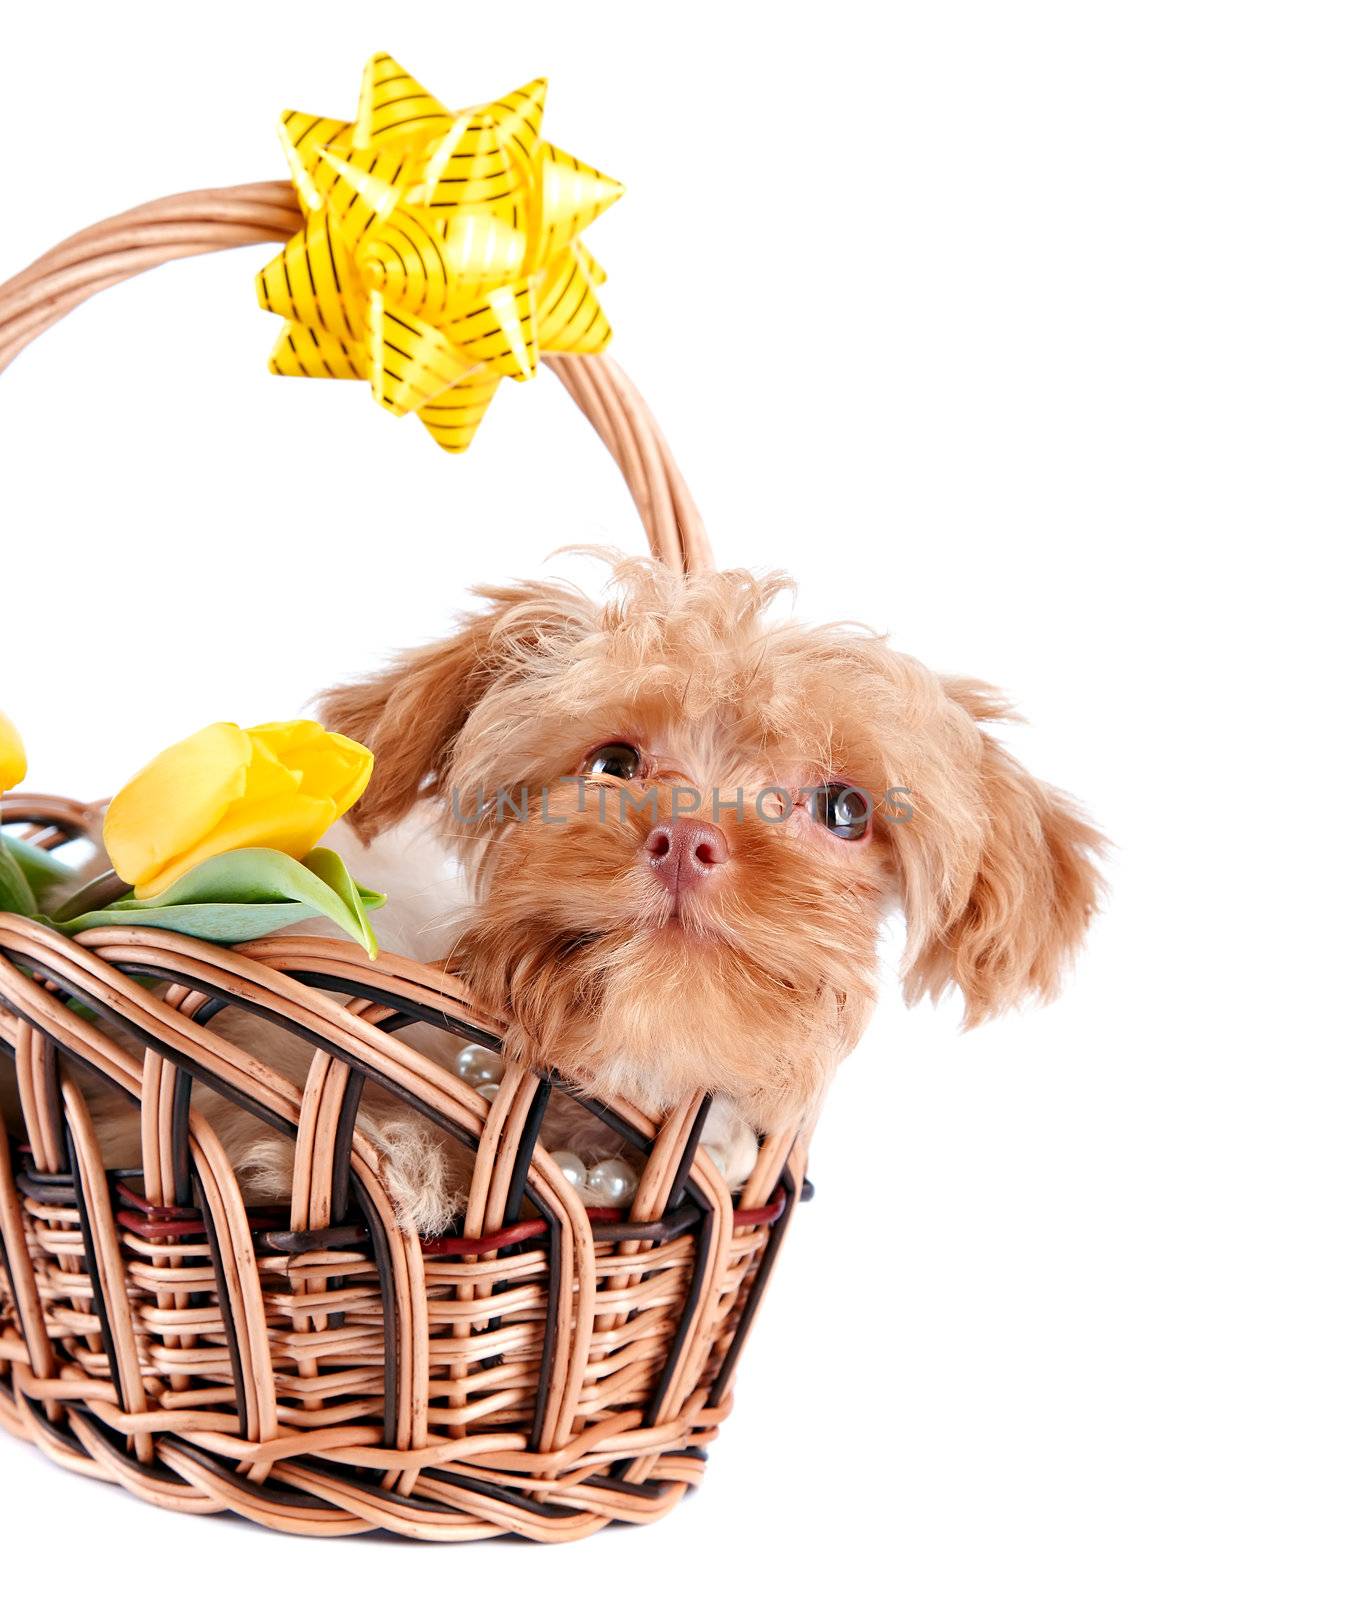 Doggie in a basket. by Azaliya